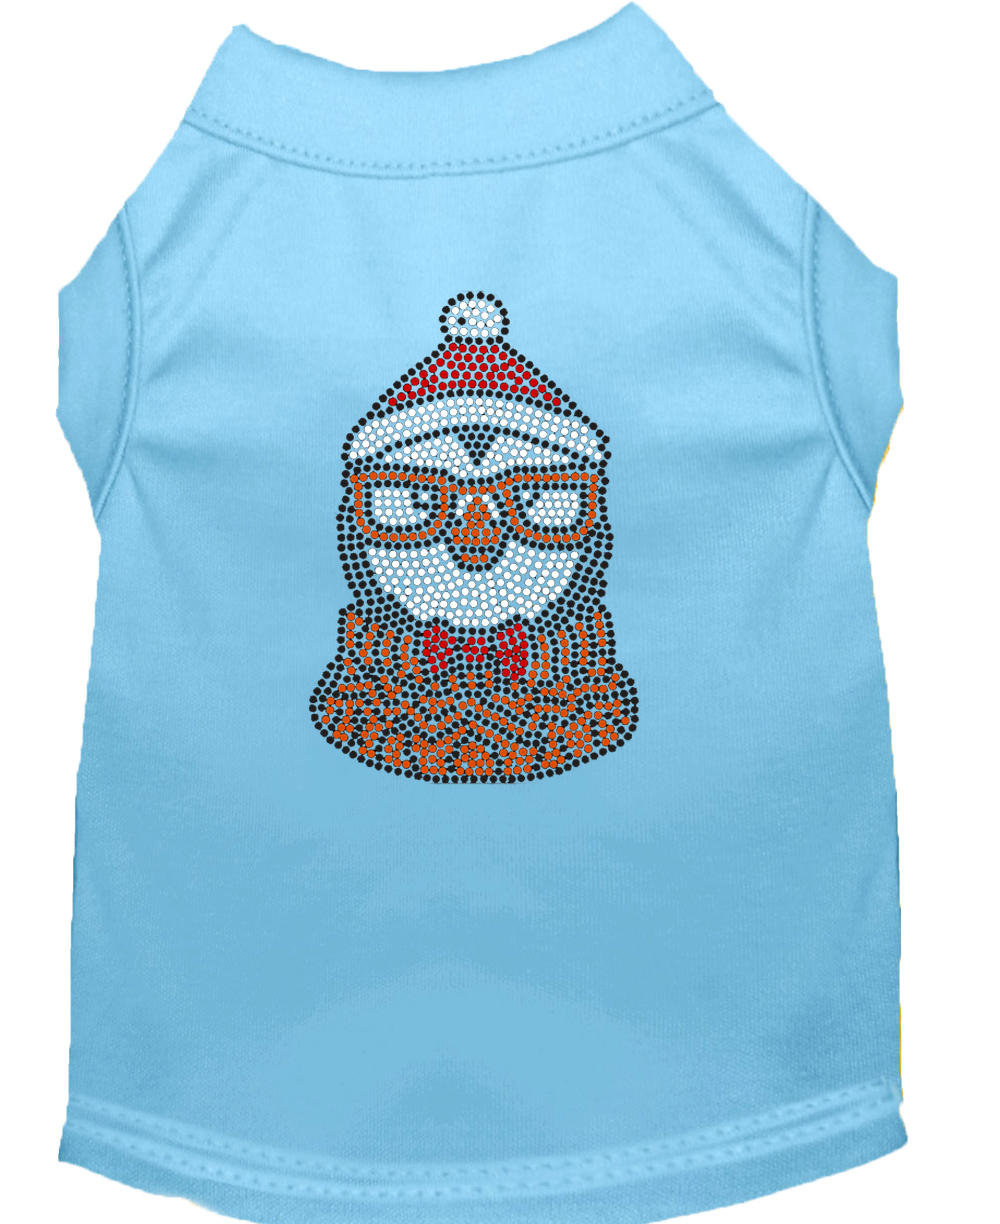 Hipster Penguin Rhinestone Dog Shirt Baby Blue XL